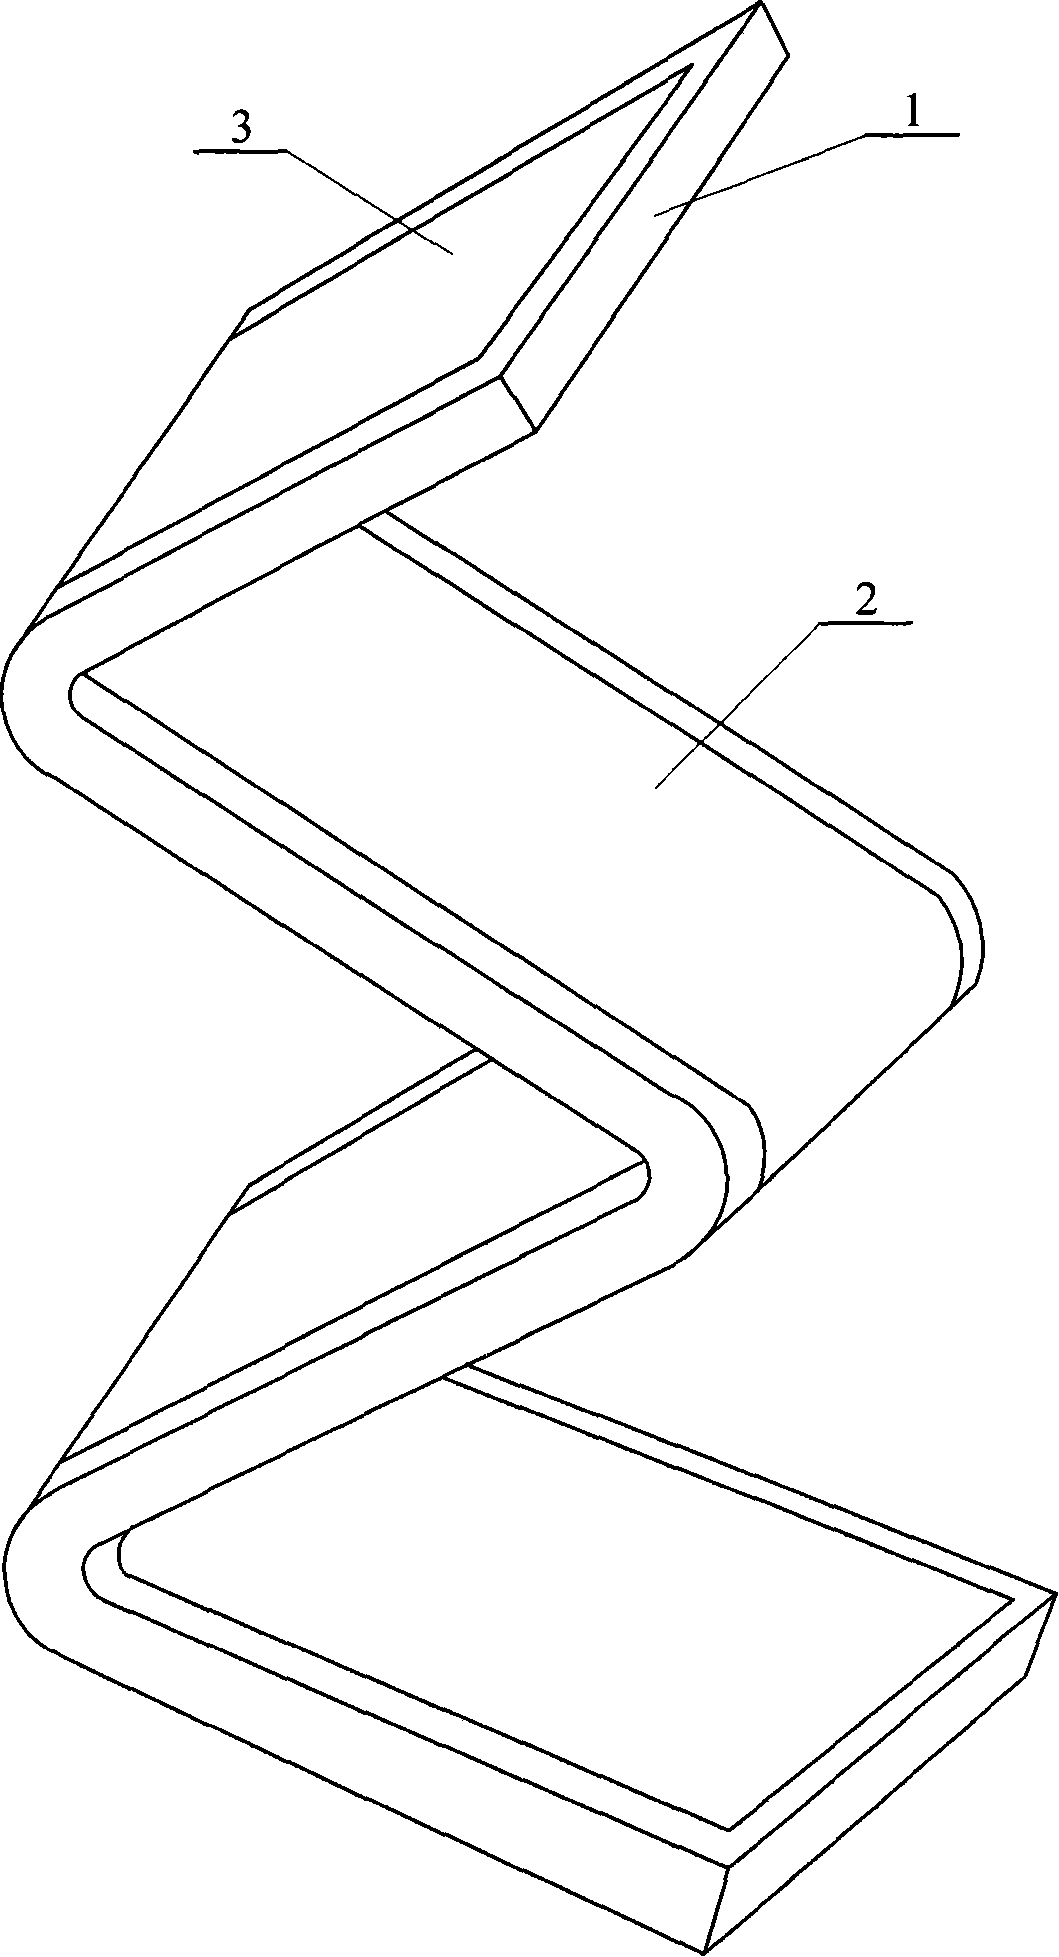 Dielectric elastomer folding-shaped driver making method